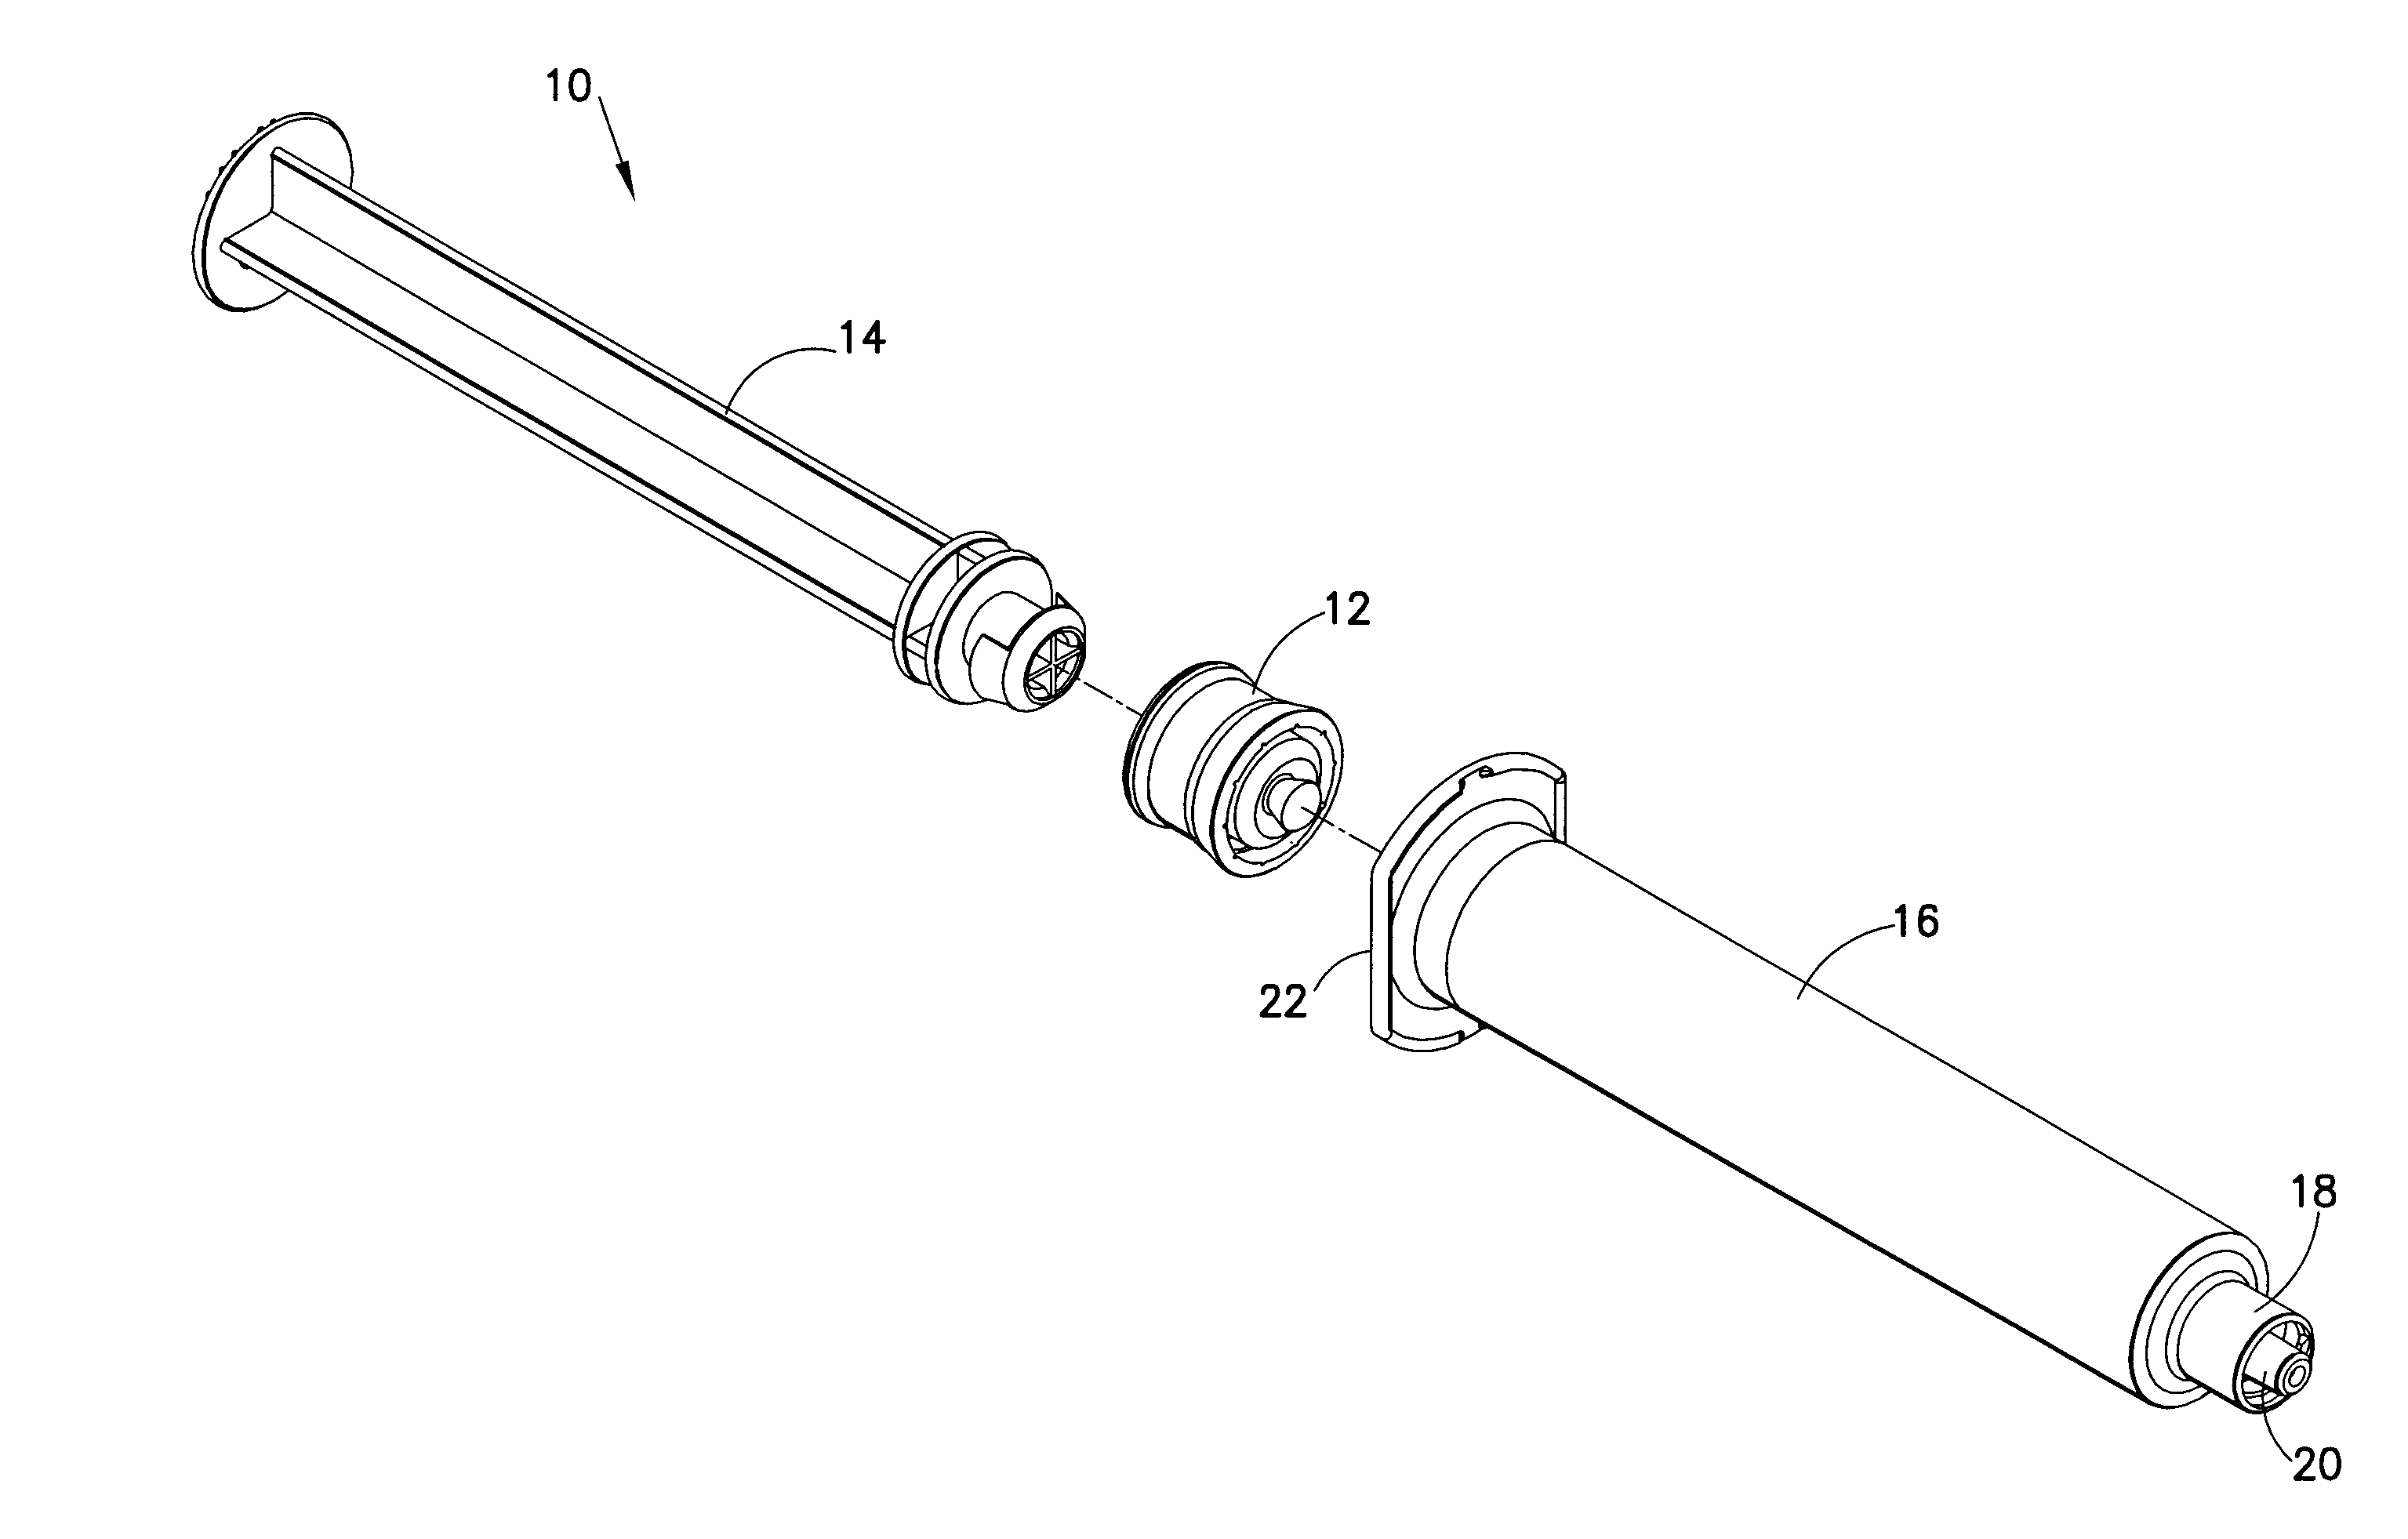 Stopper and plunger rod for a pre-filled syringe